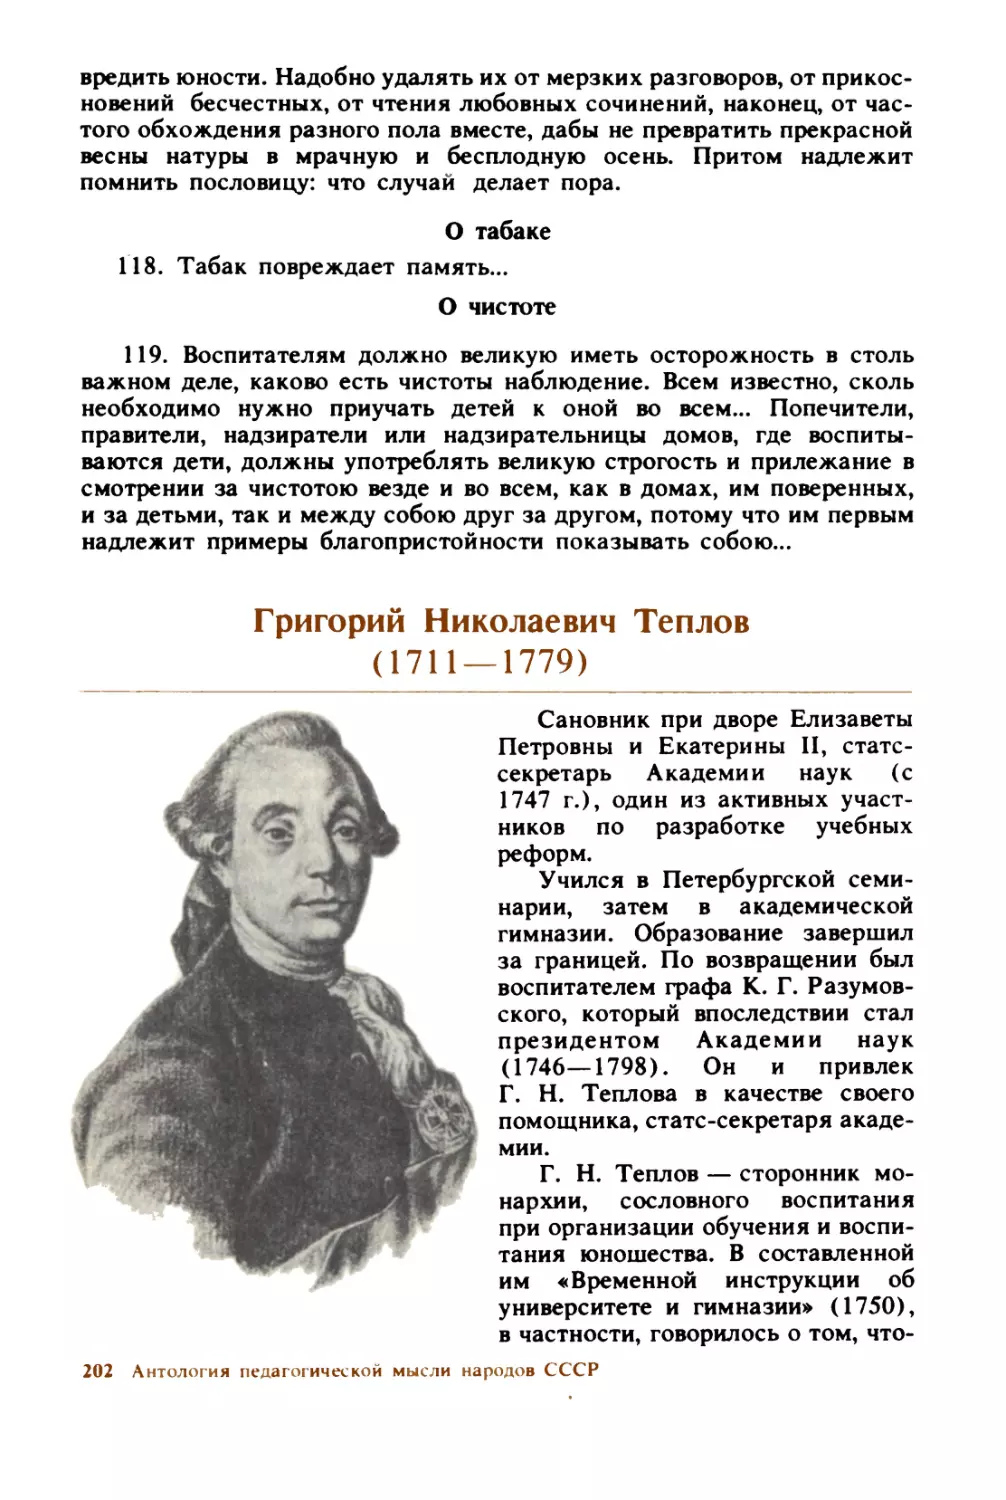 Григорий  Николаевич  Теплов